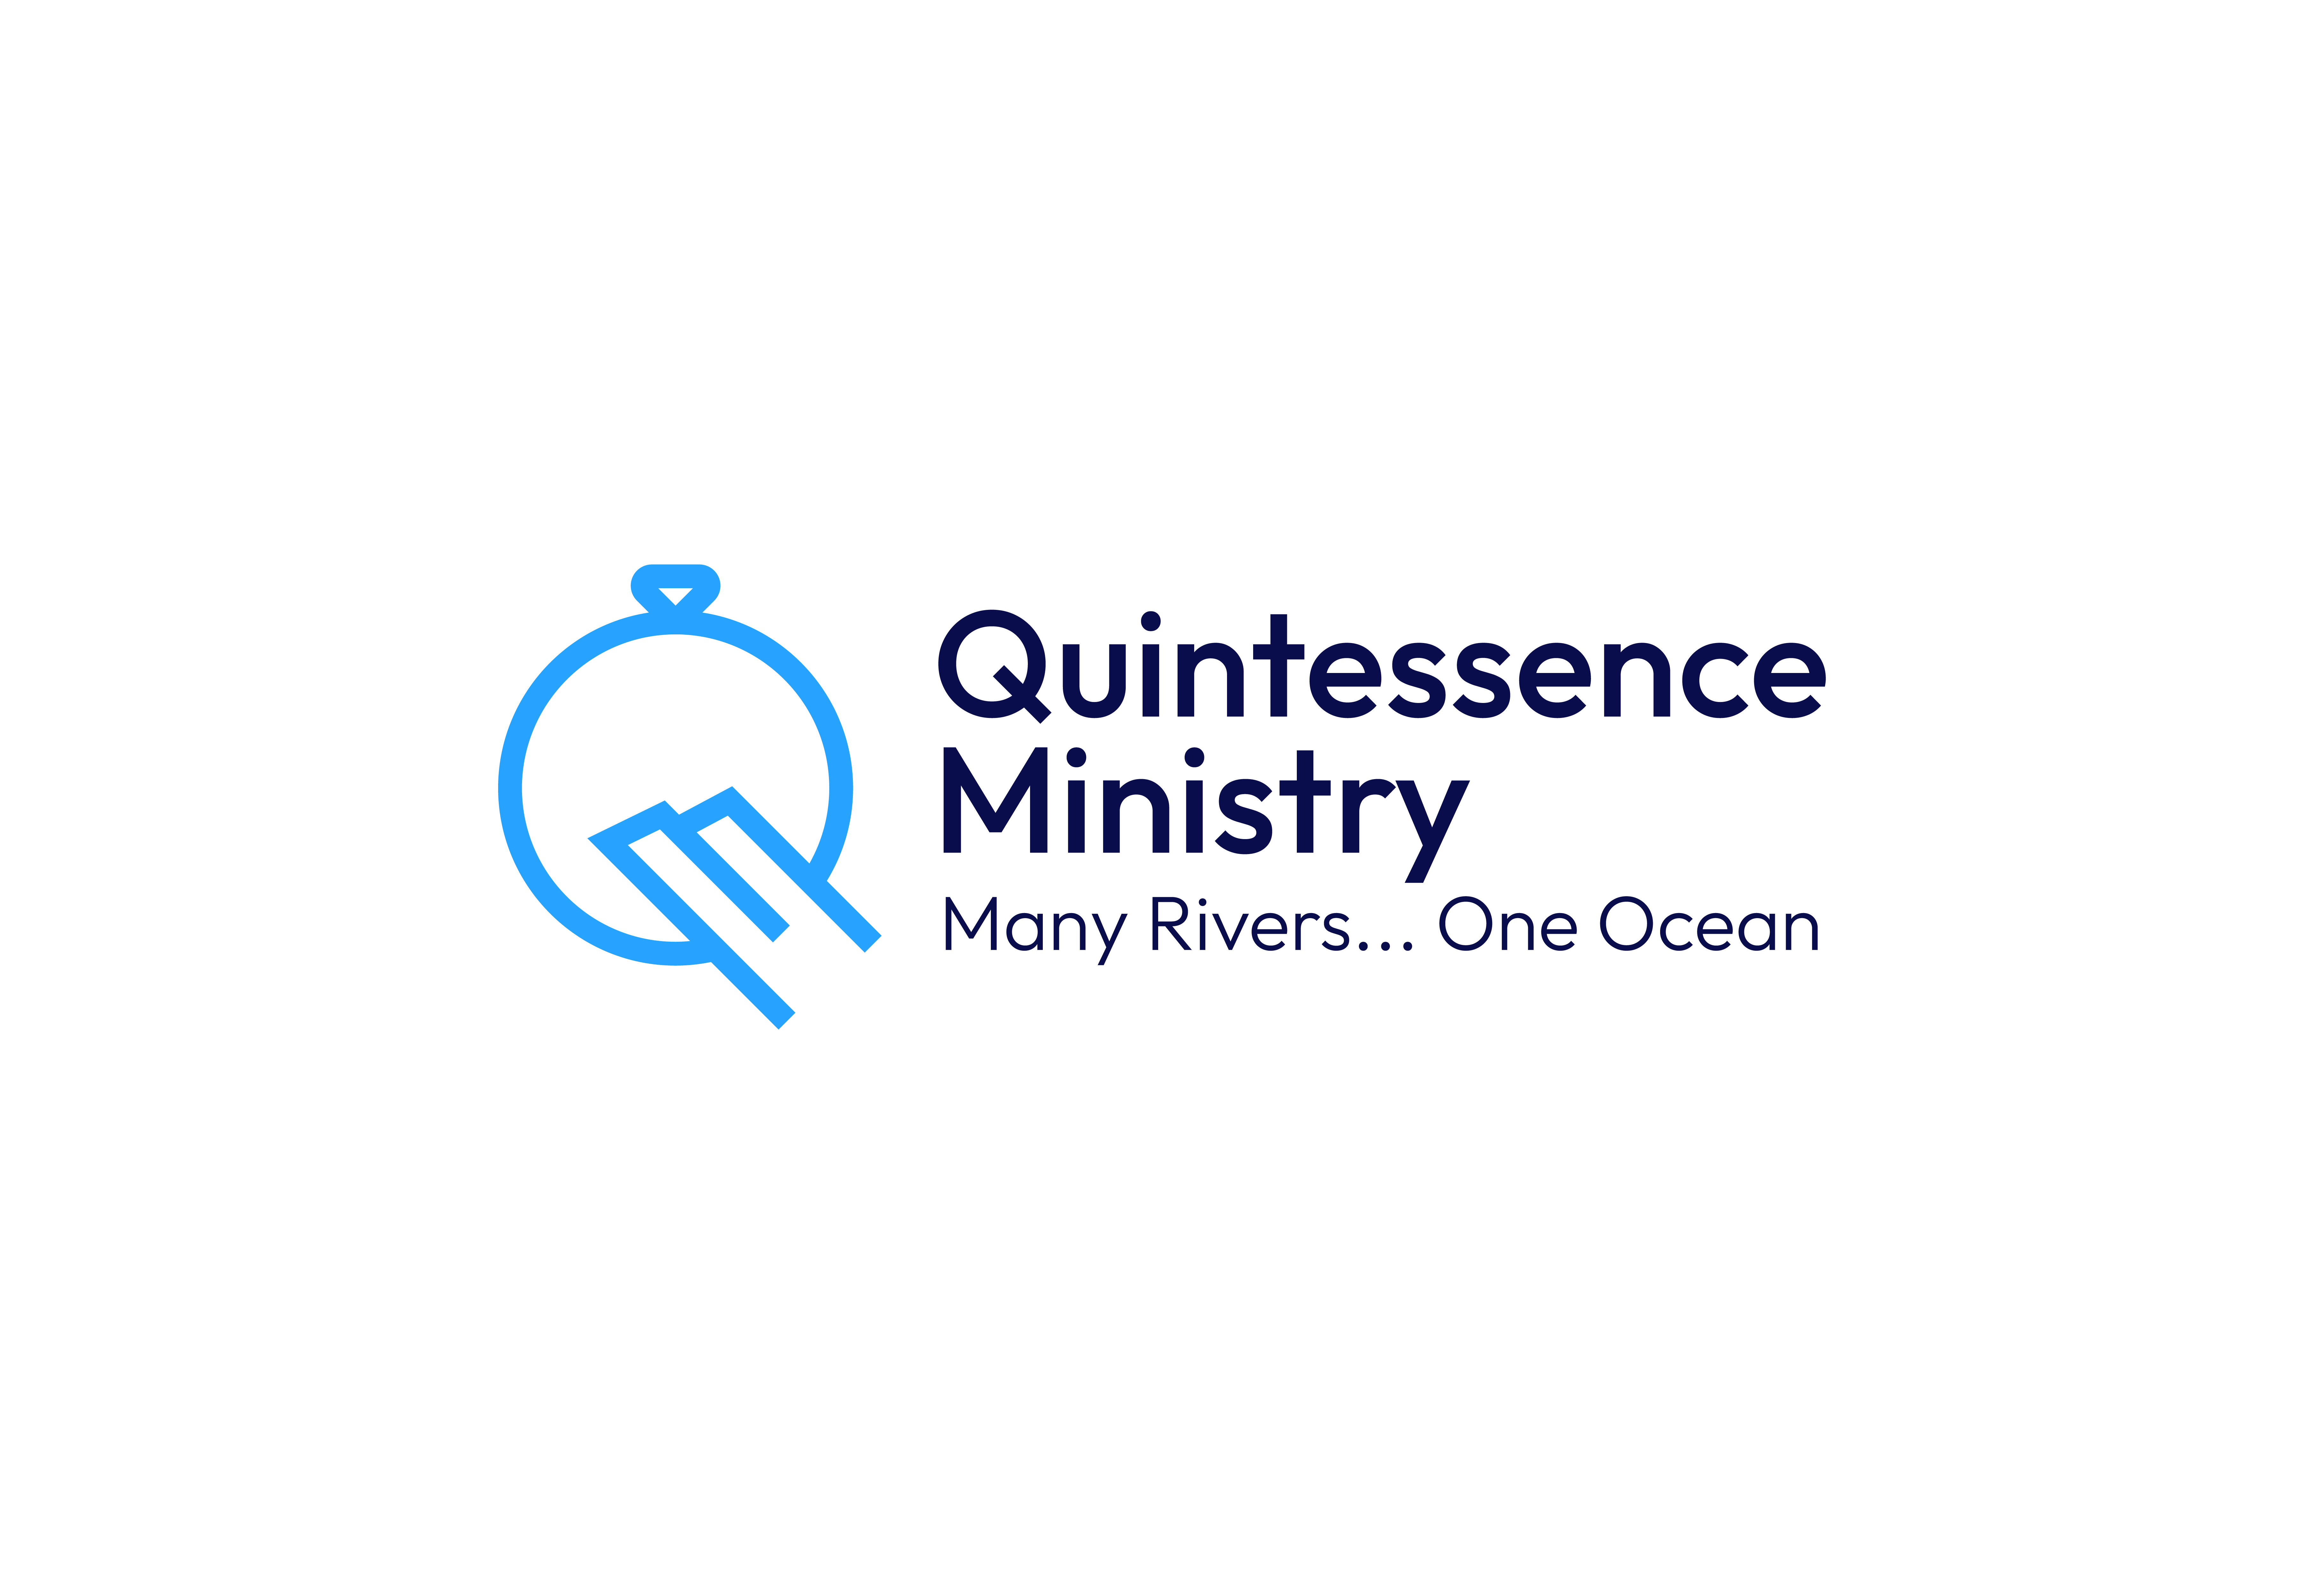 Quintessence Ministry